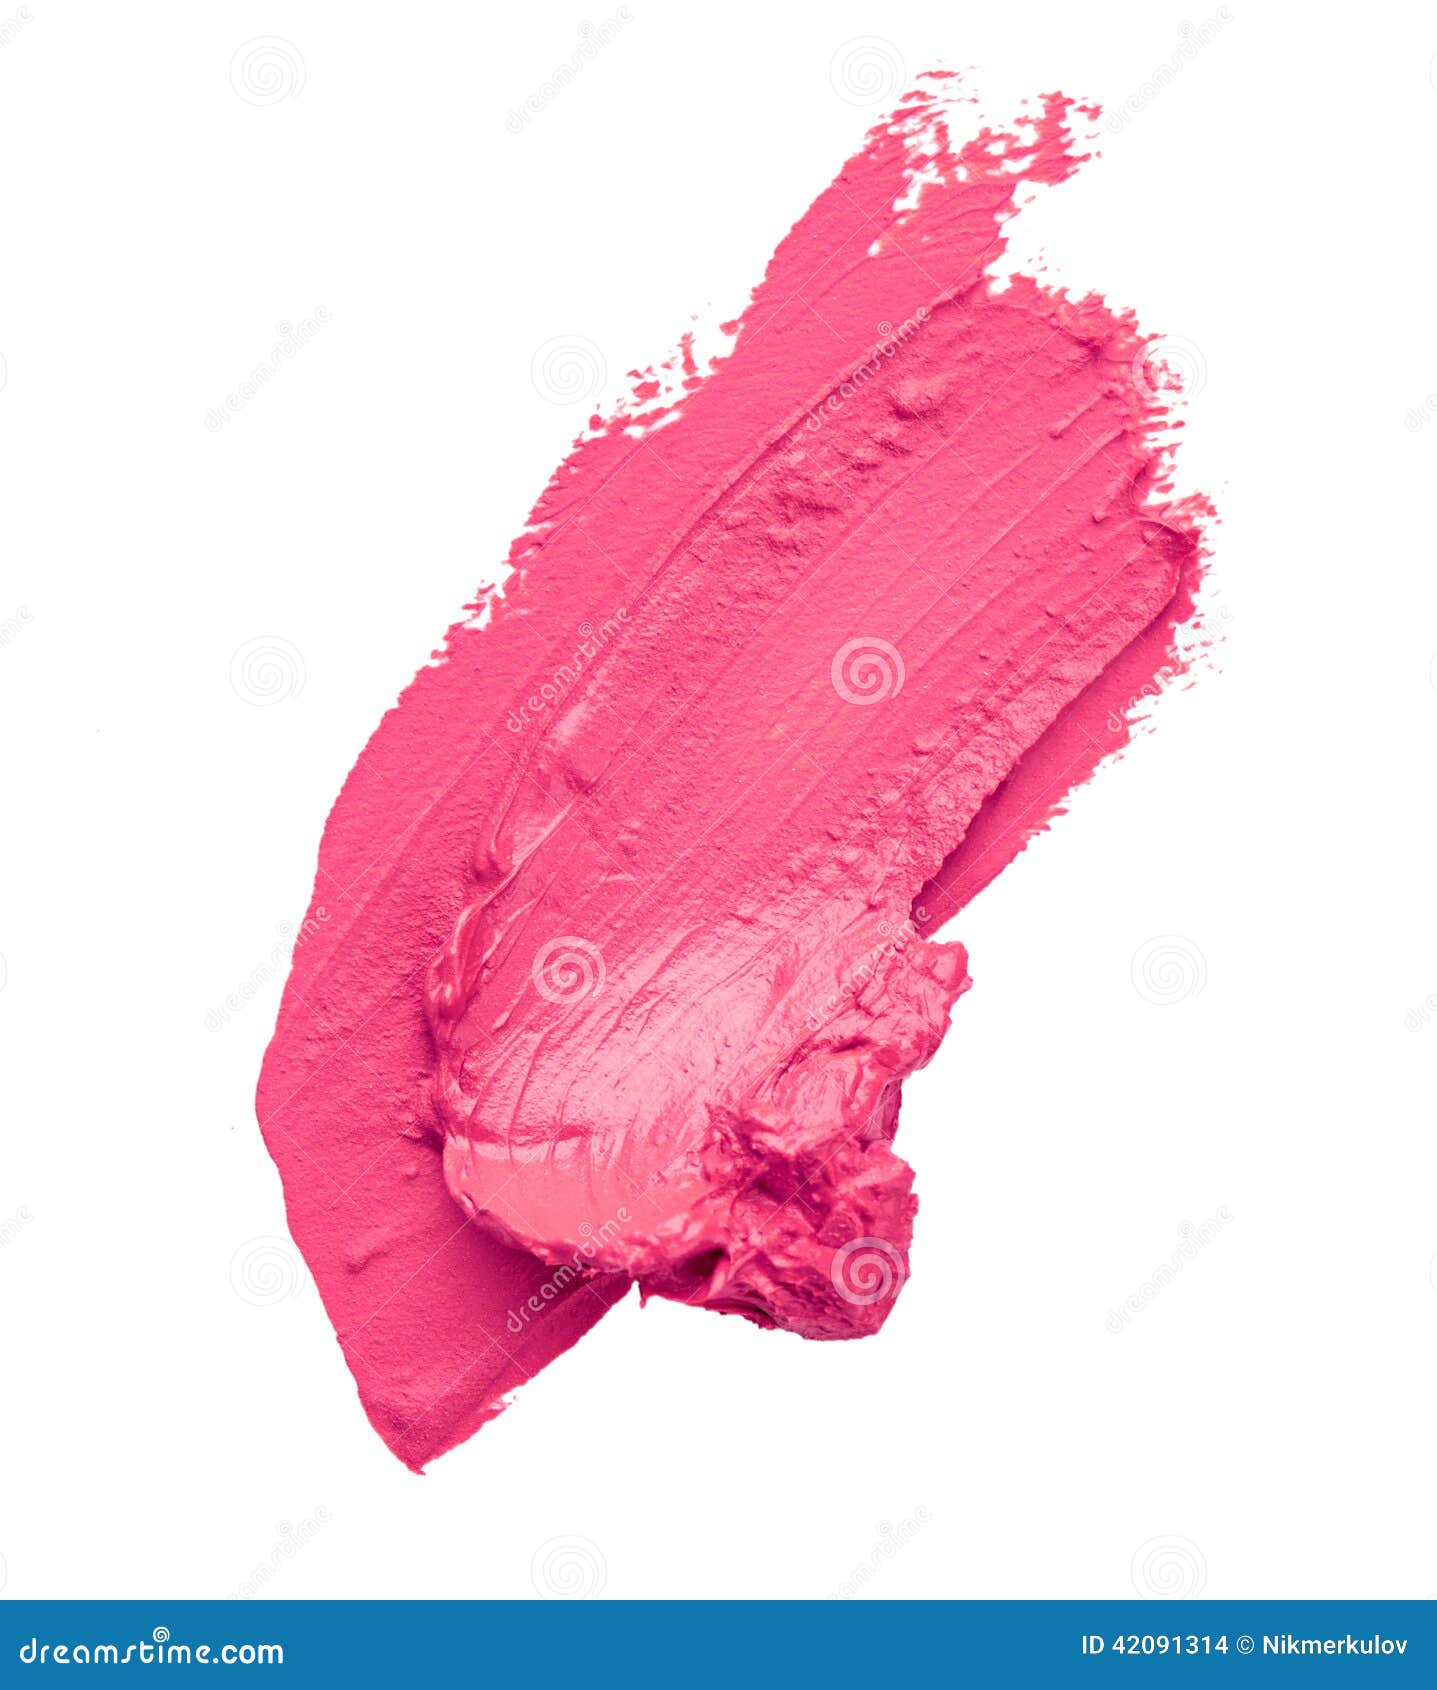 smudged pink lipstick